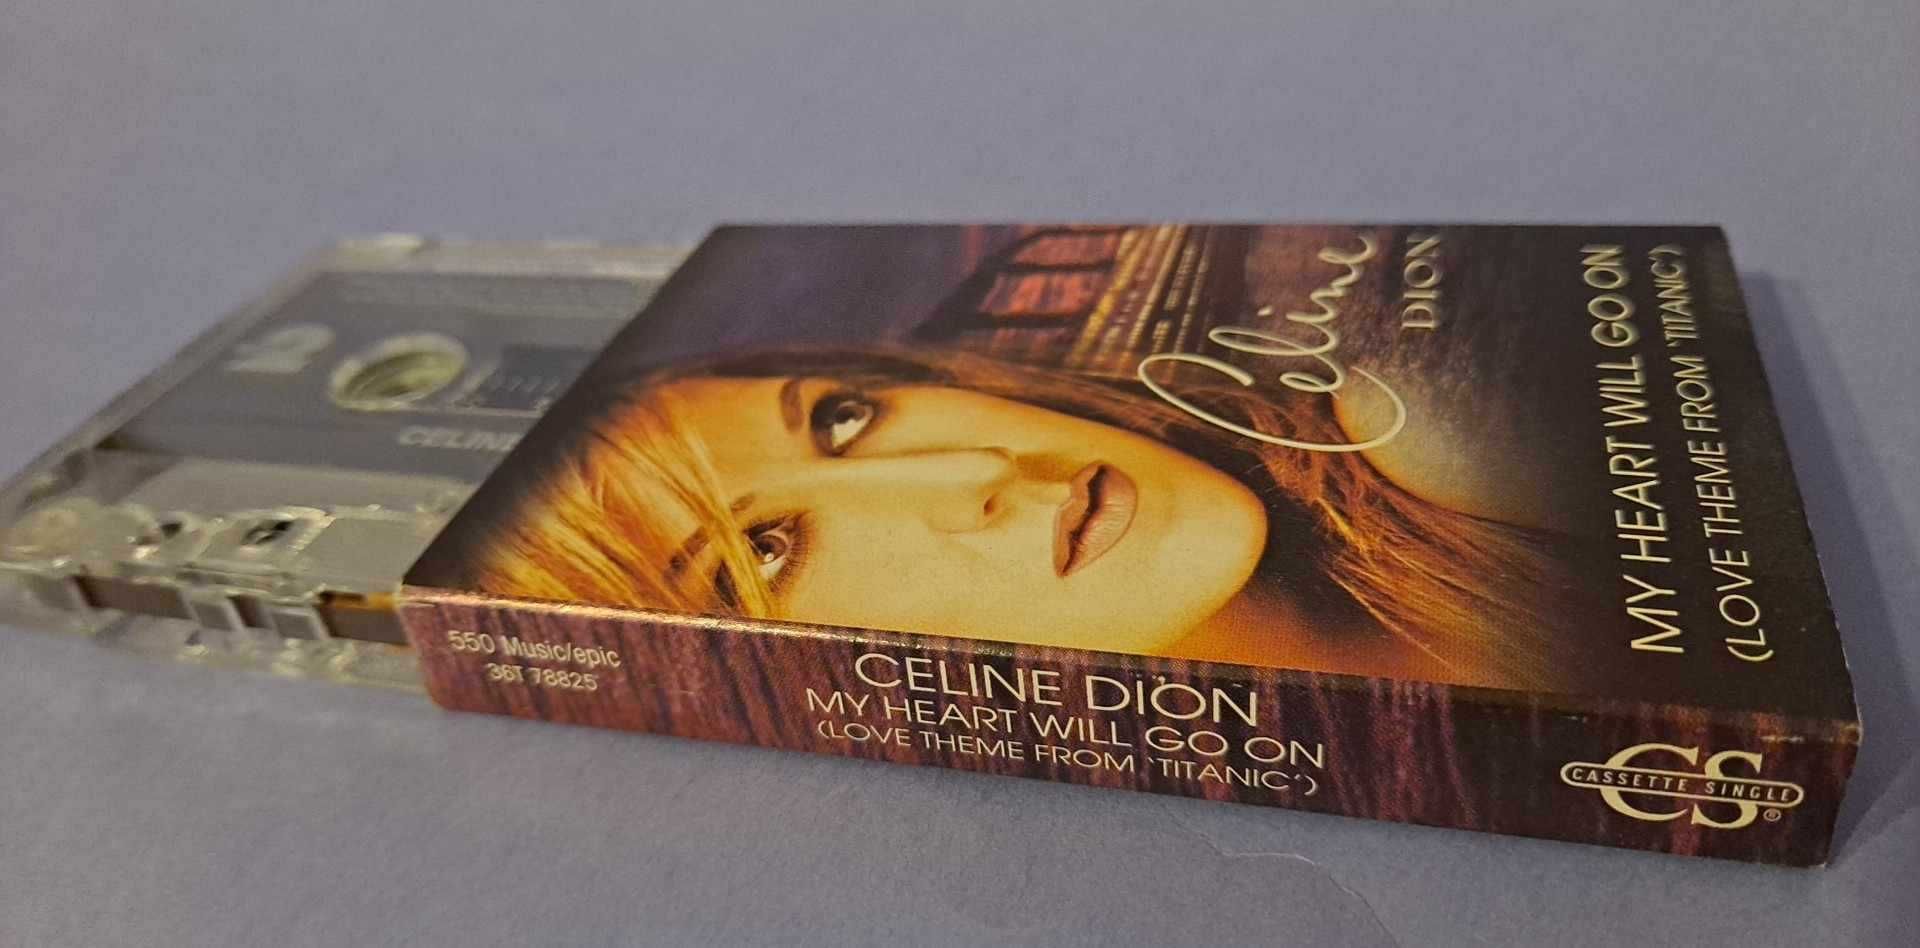 Celine Dion – My Heart Will Go On, USA 1998 KASETA singiel